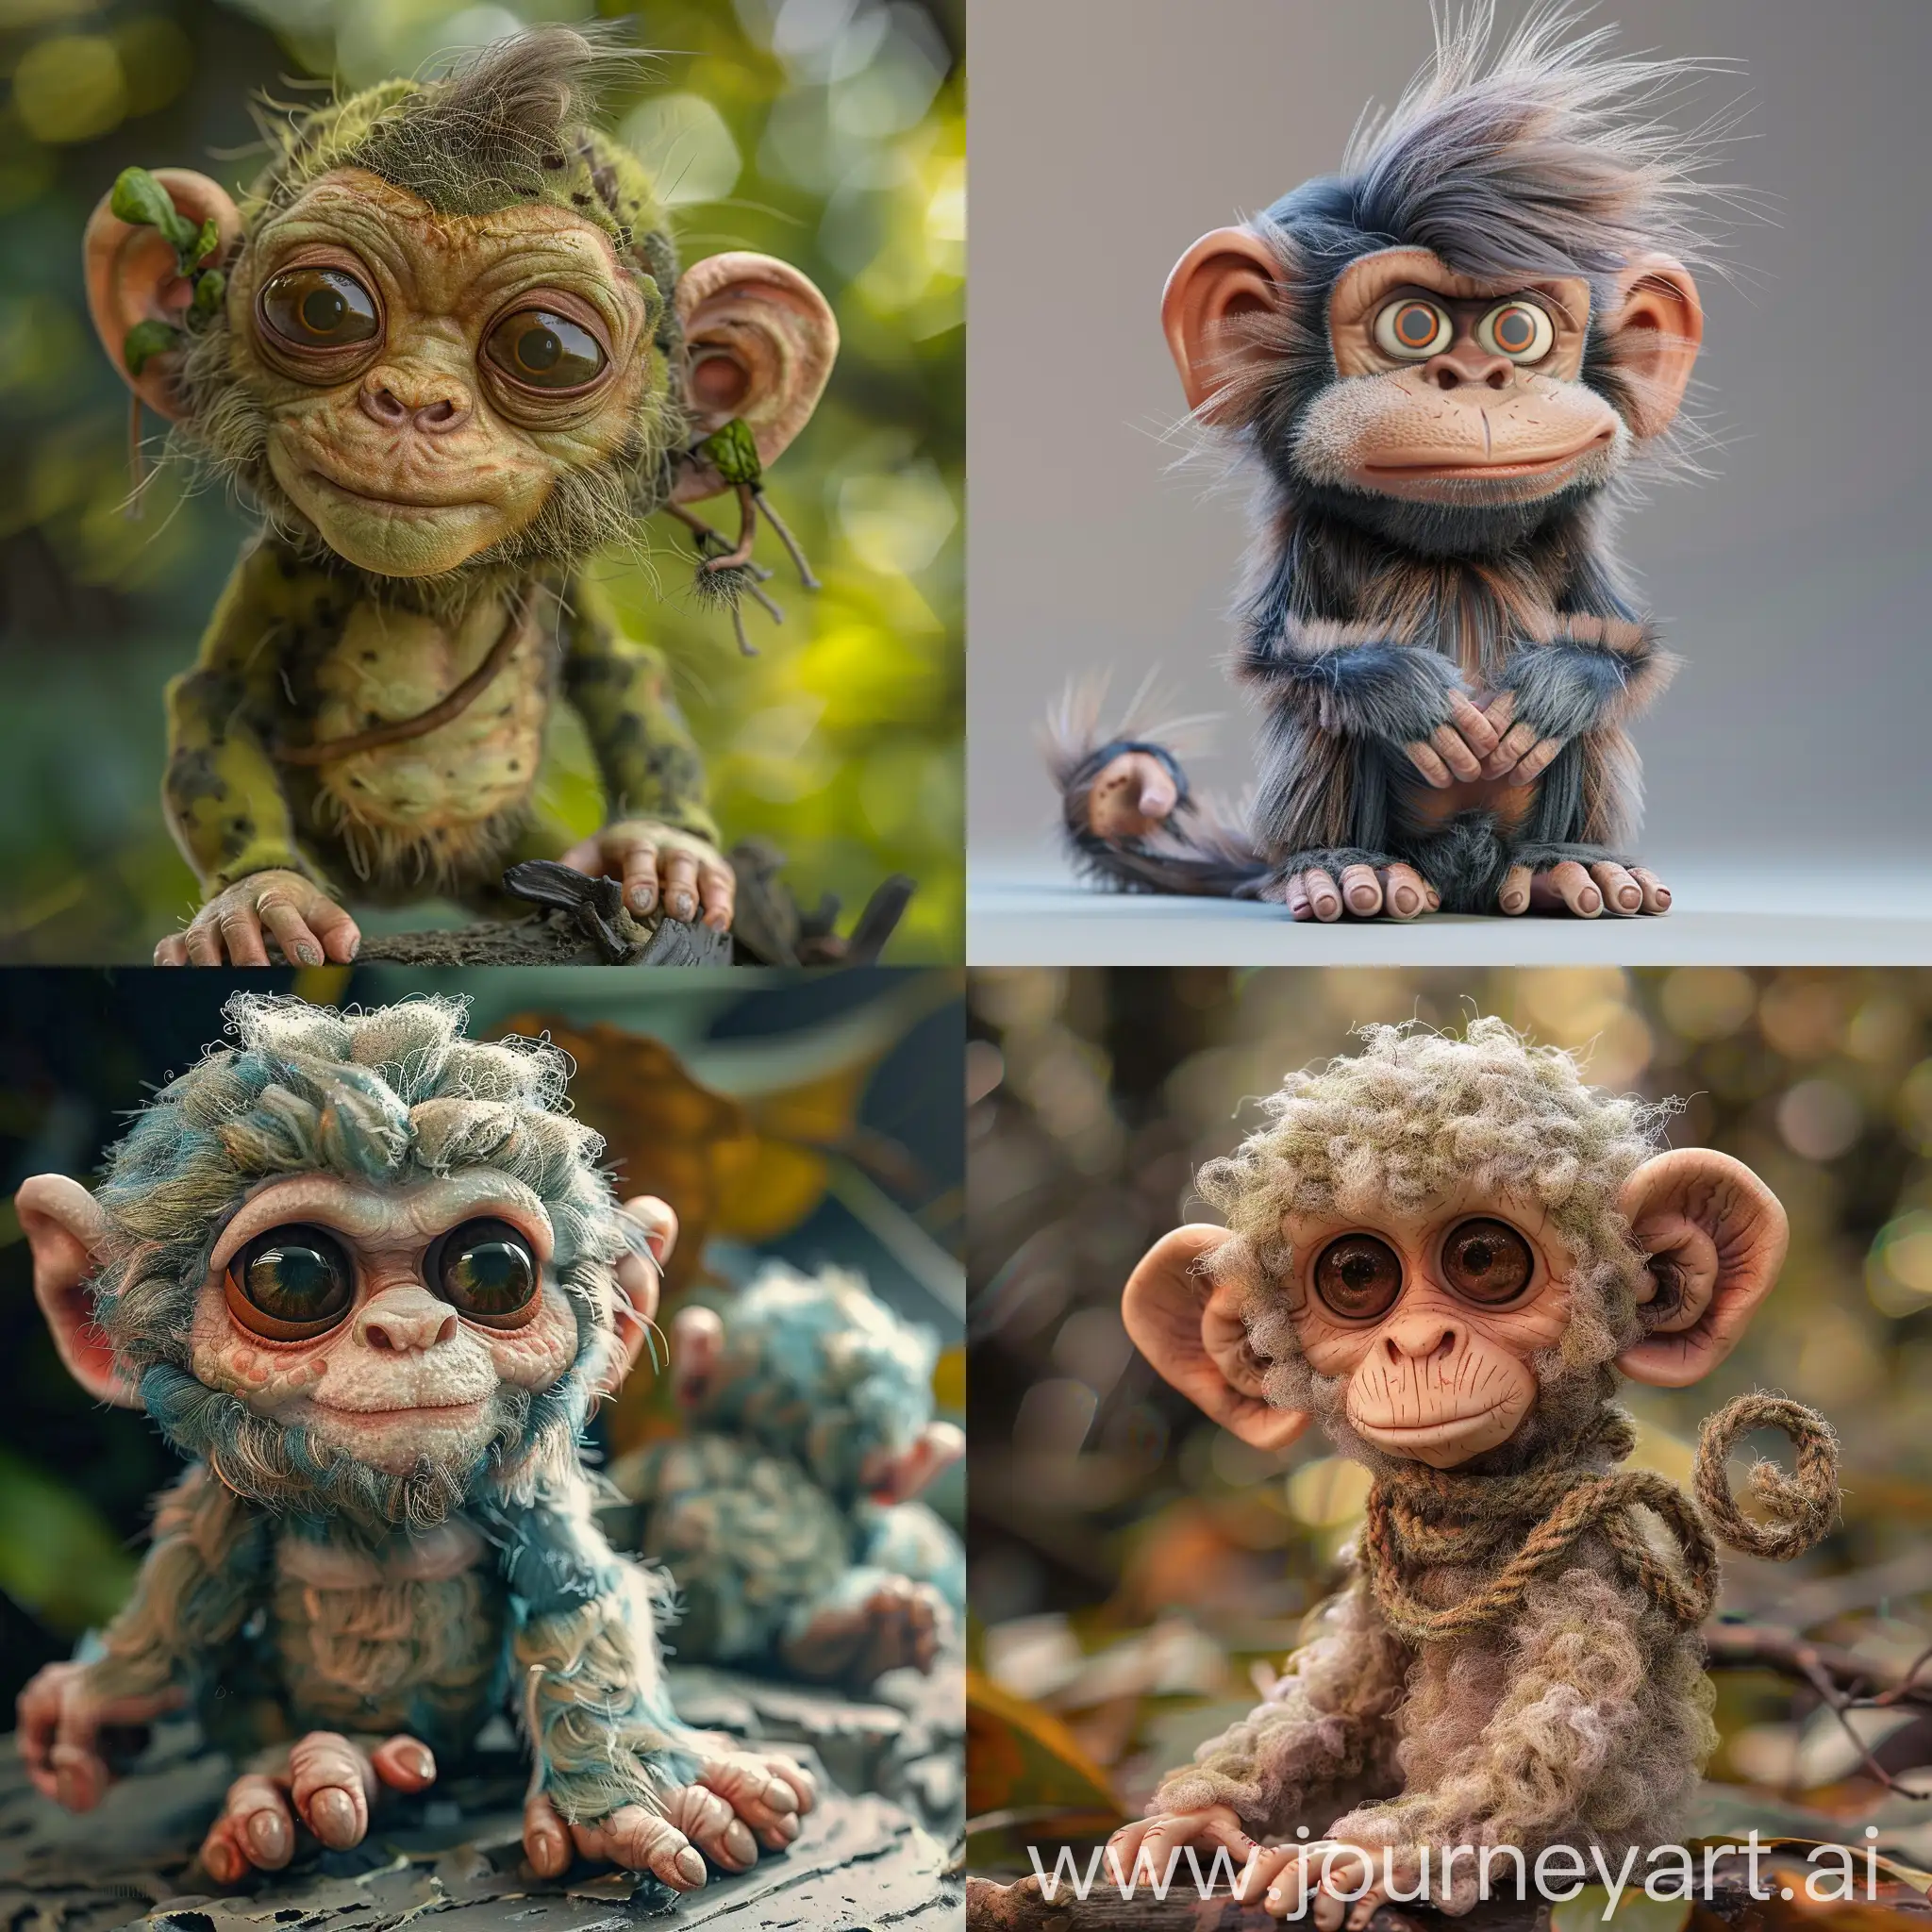 Adorable-MonkeyTroll-Hybrid-Inspired-by-Toy-Story